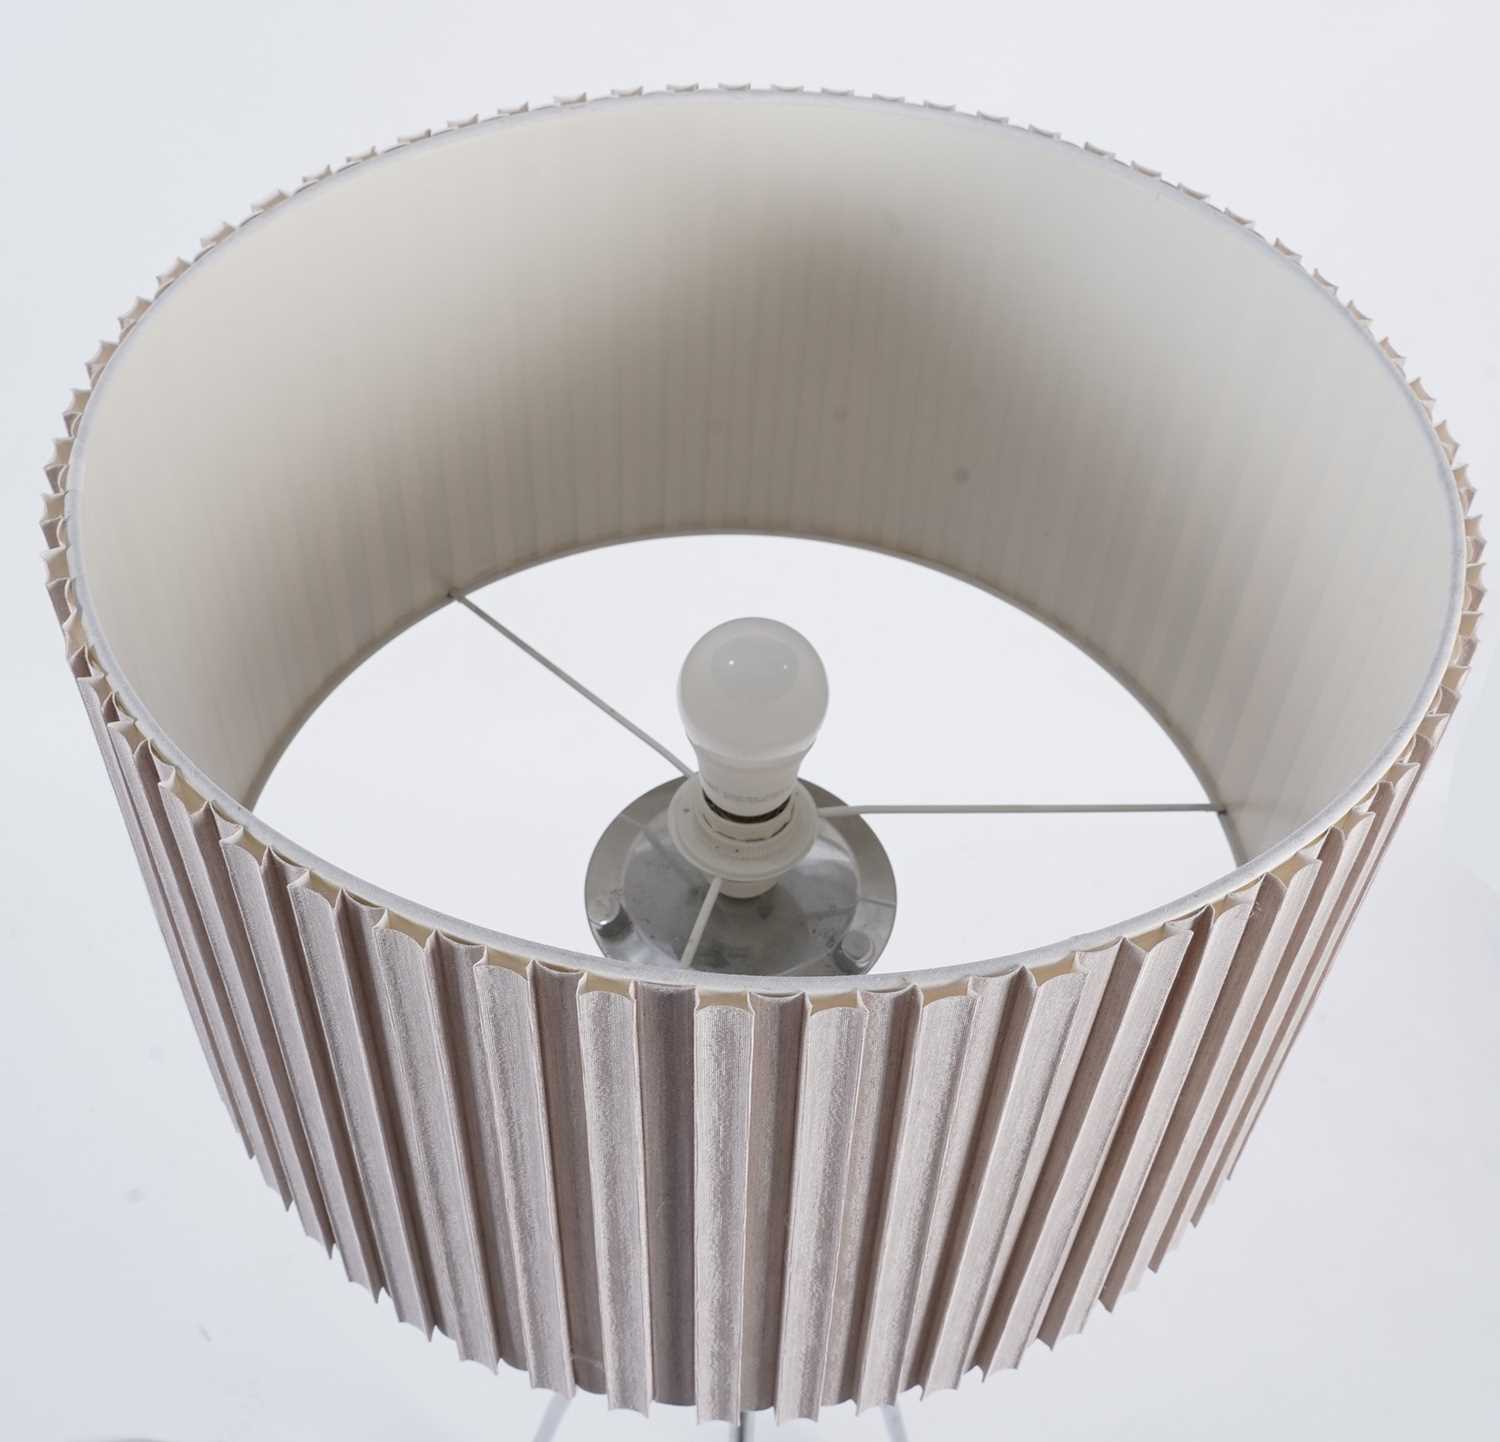 A Pagazzi Sabella tripod floor lamp - Image 2 of 2